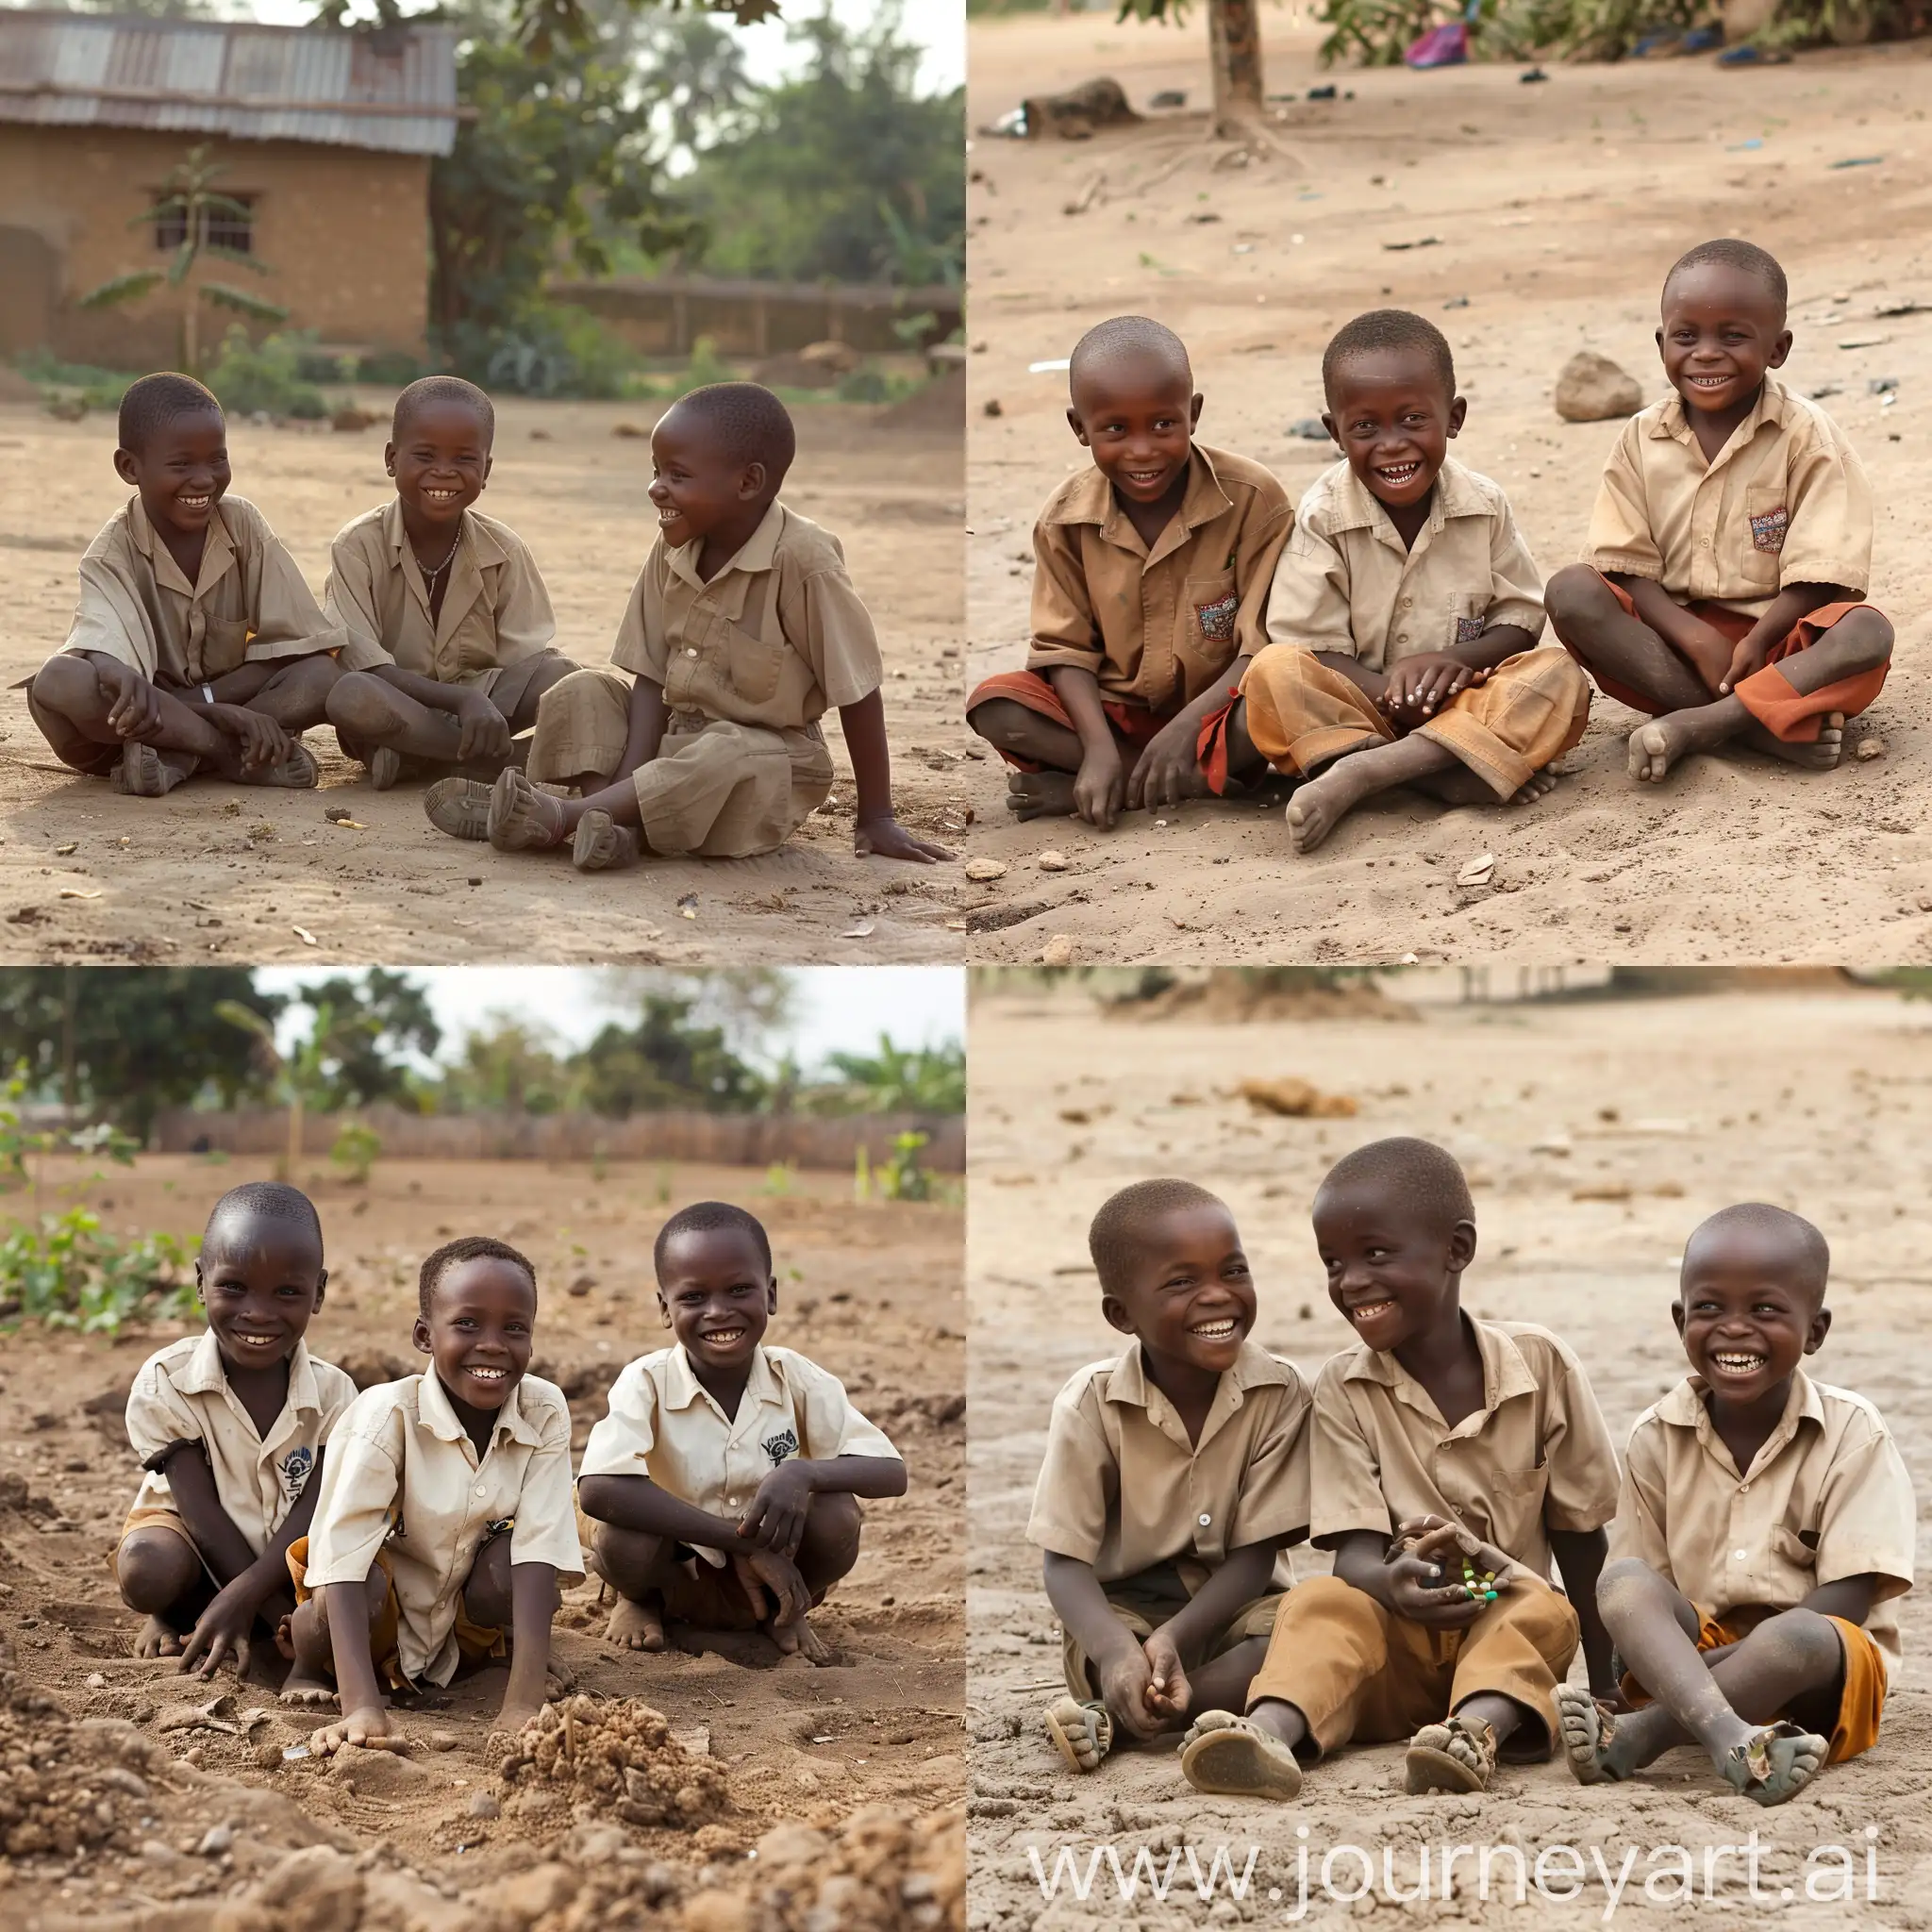 Joyful-Nigerian-Schoolboys-Engaged-in-Traditional-Awale-Game-on-Village-Ground